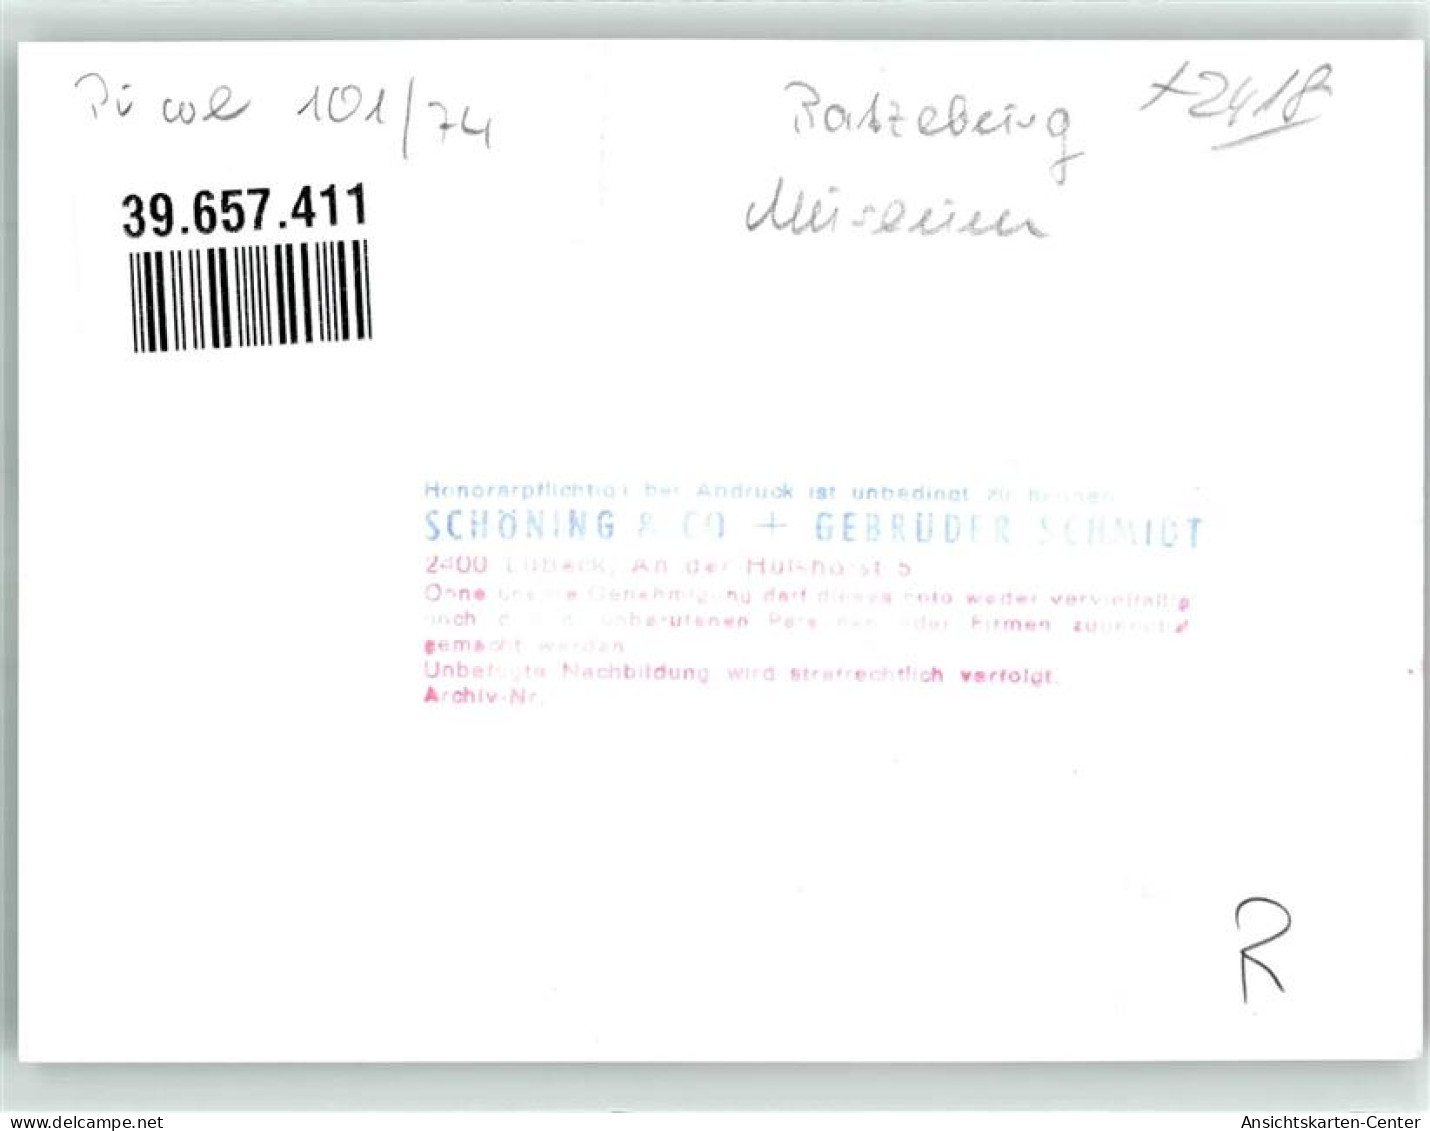 39657411 - Ratzeburg - Ratzeburg